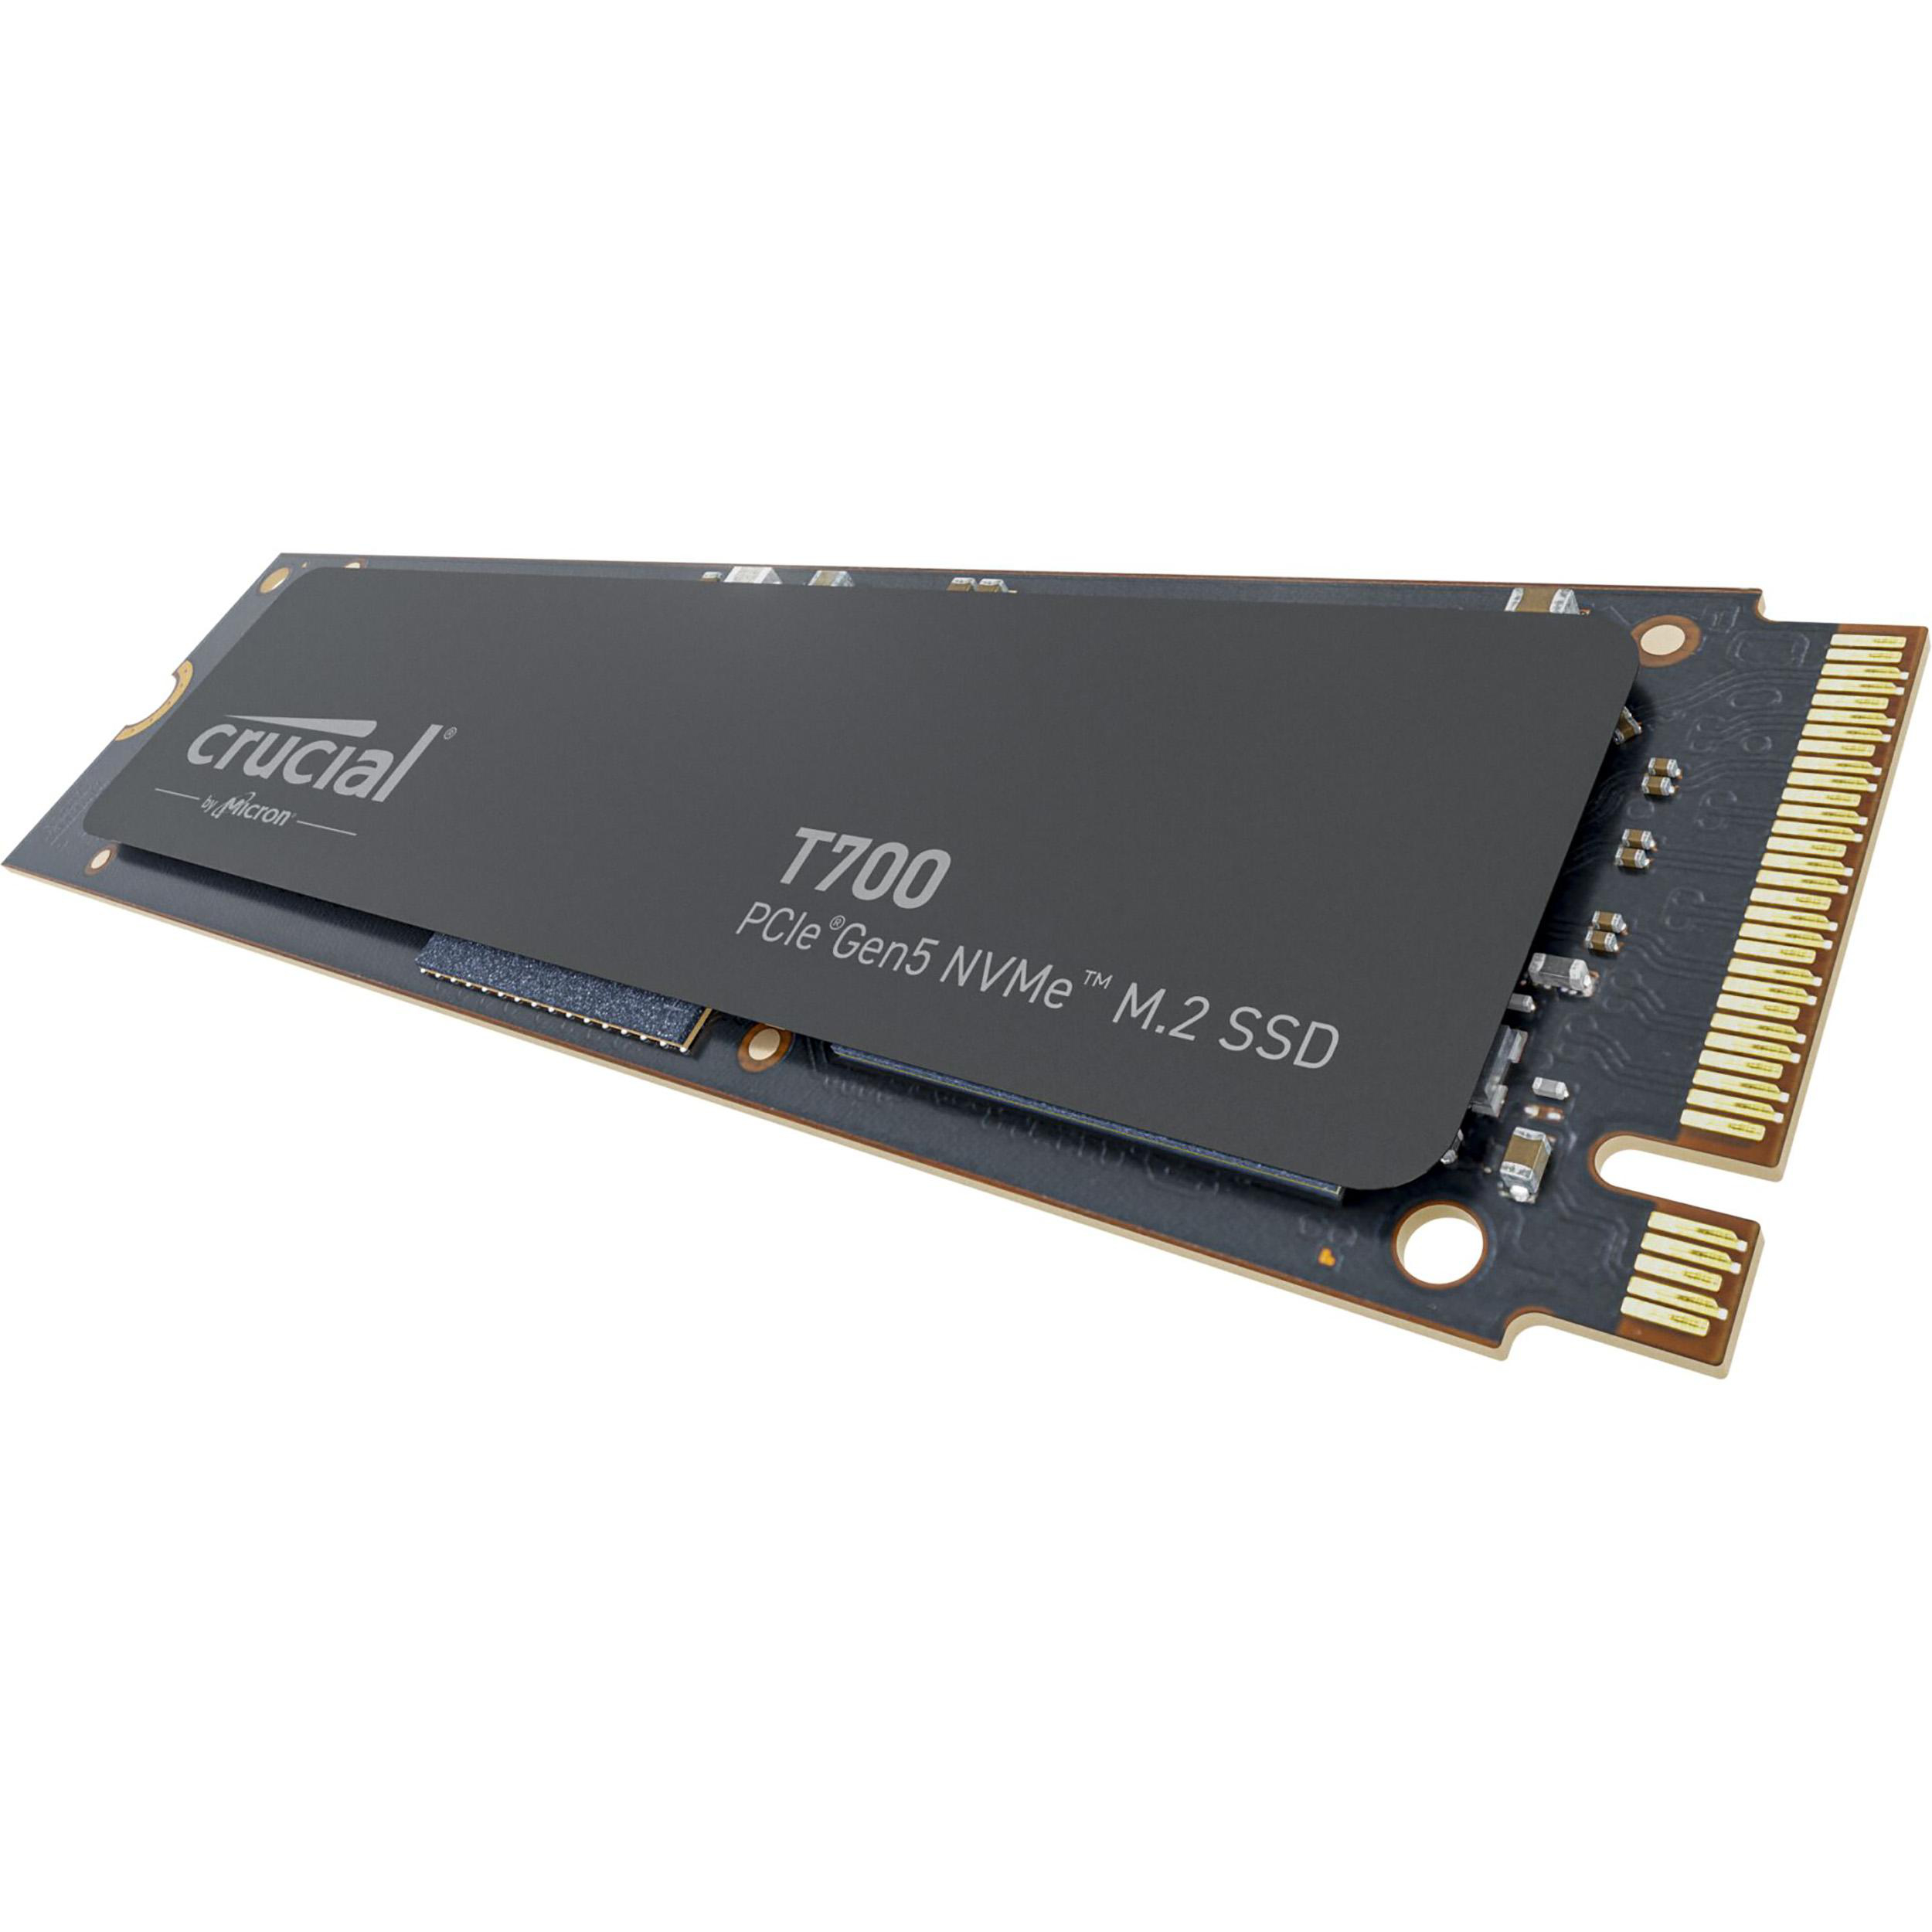 NVMe TB SSD SSD, T700 Gen5 PCIe 1 CRUCIAL intern M.2,